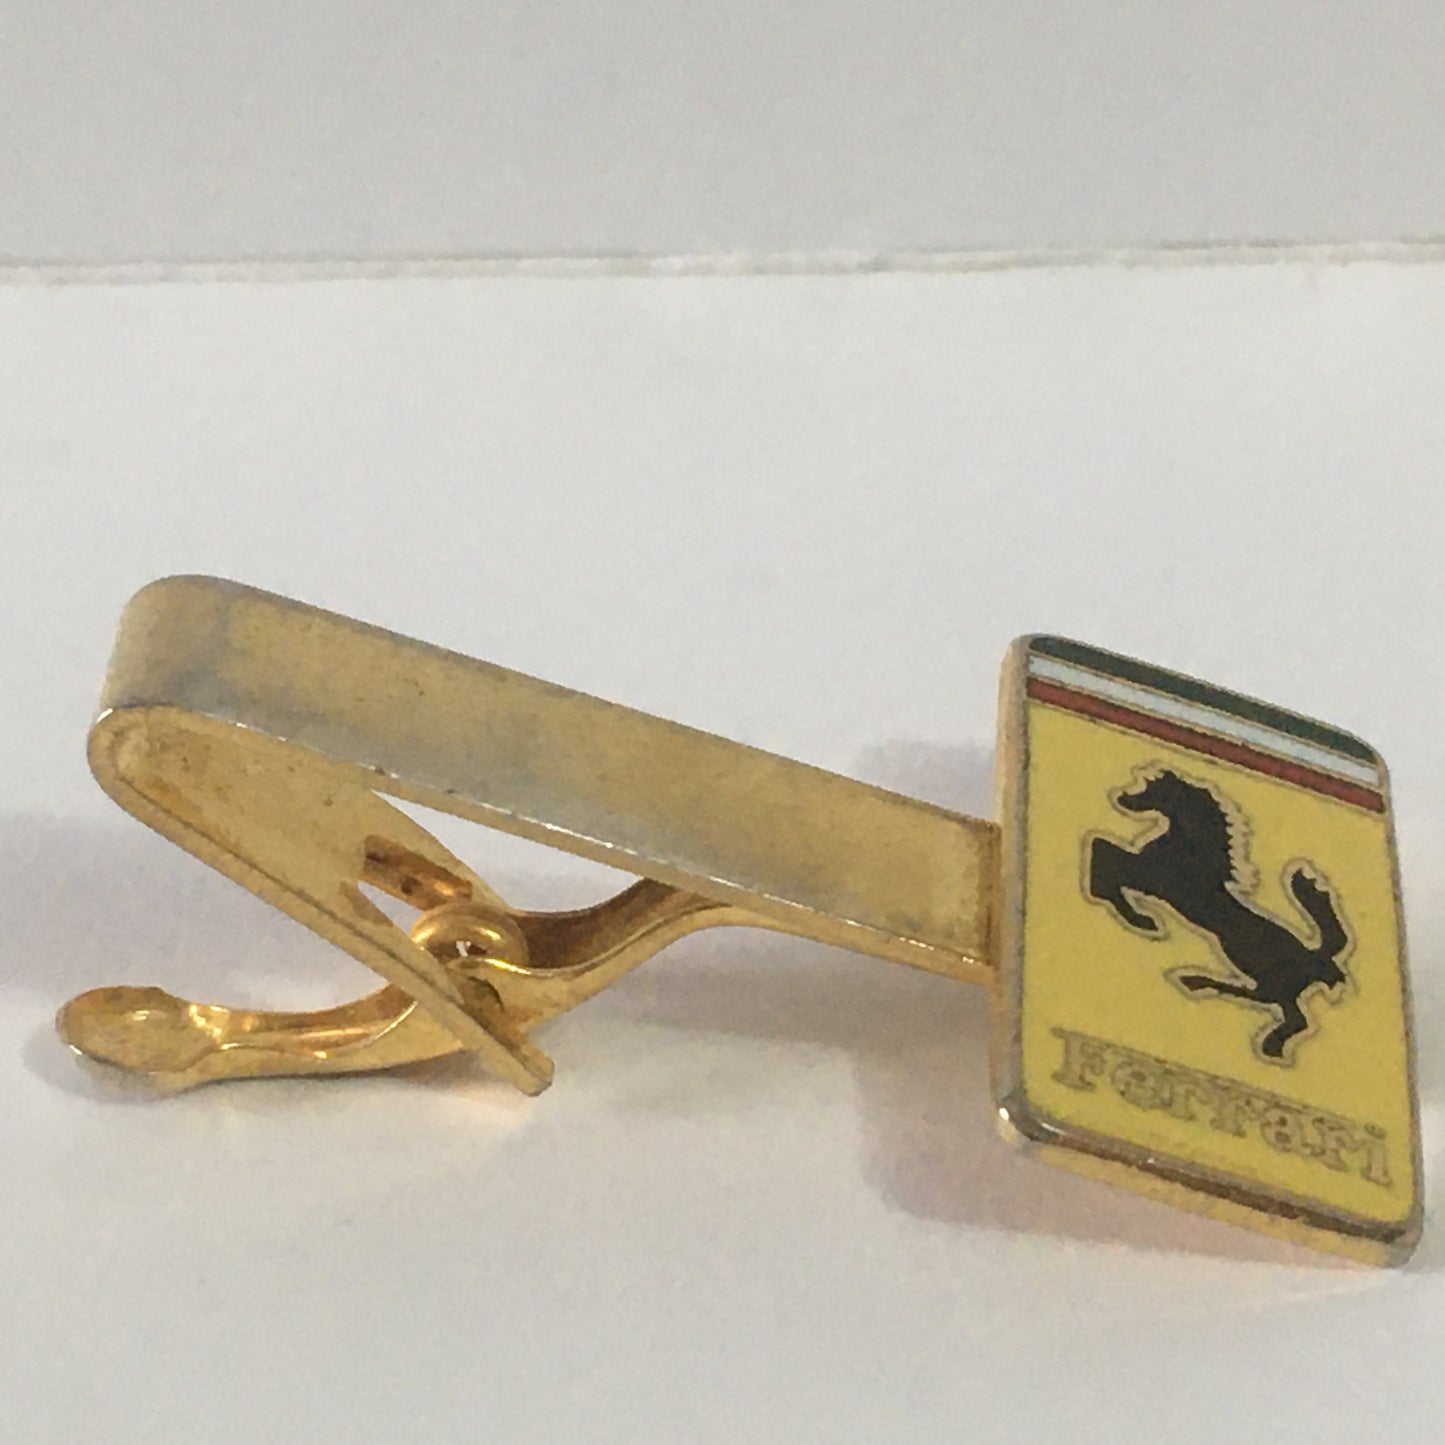 Ferrari Tie Clip in Gold Colored Metal with Enamelled Ferrari Emblem